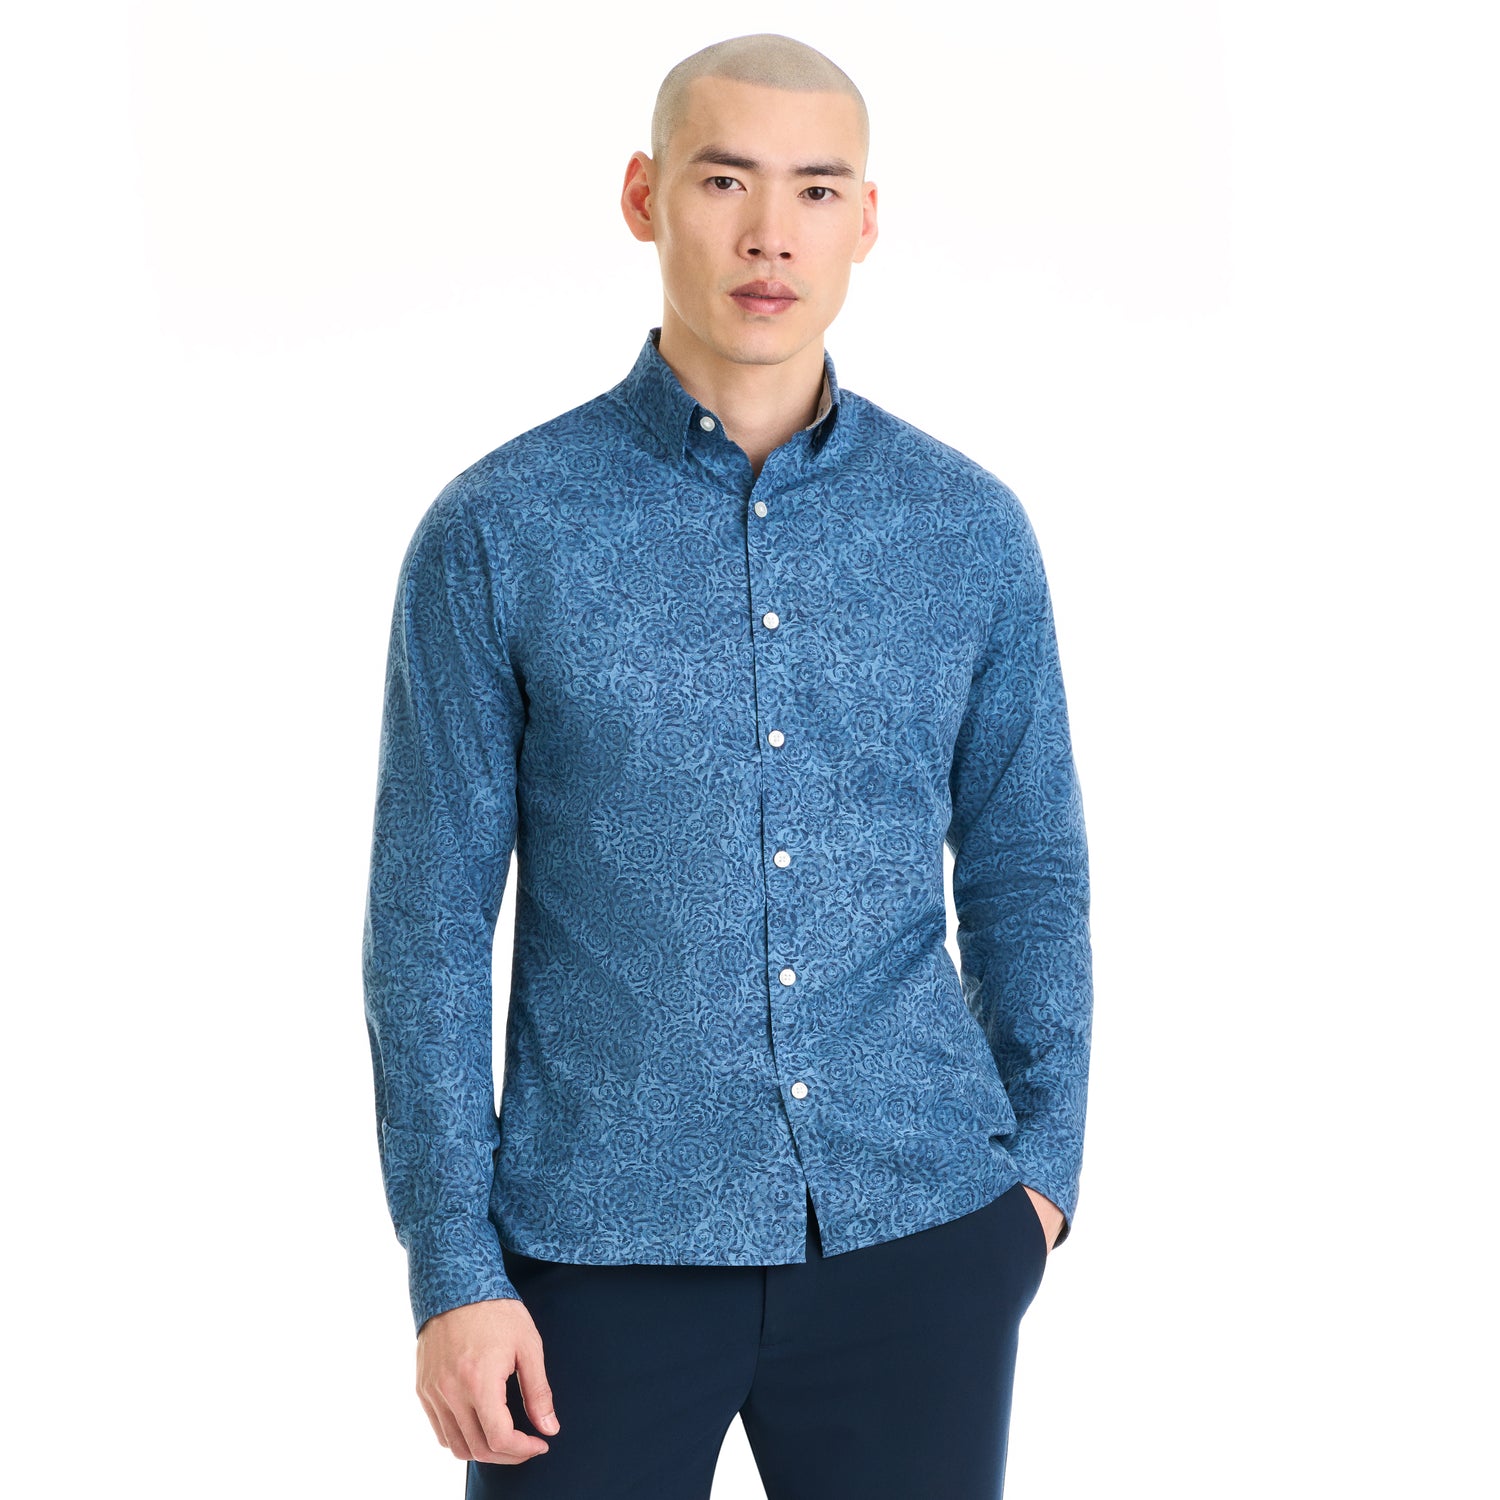 Essential Stain Shield Shirt Long Sleeve Wovens Rose Print - Slim Fit